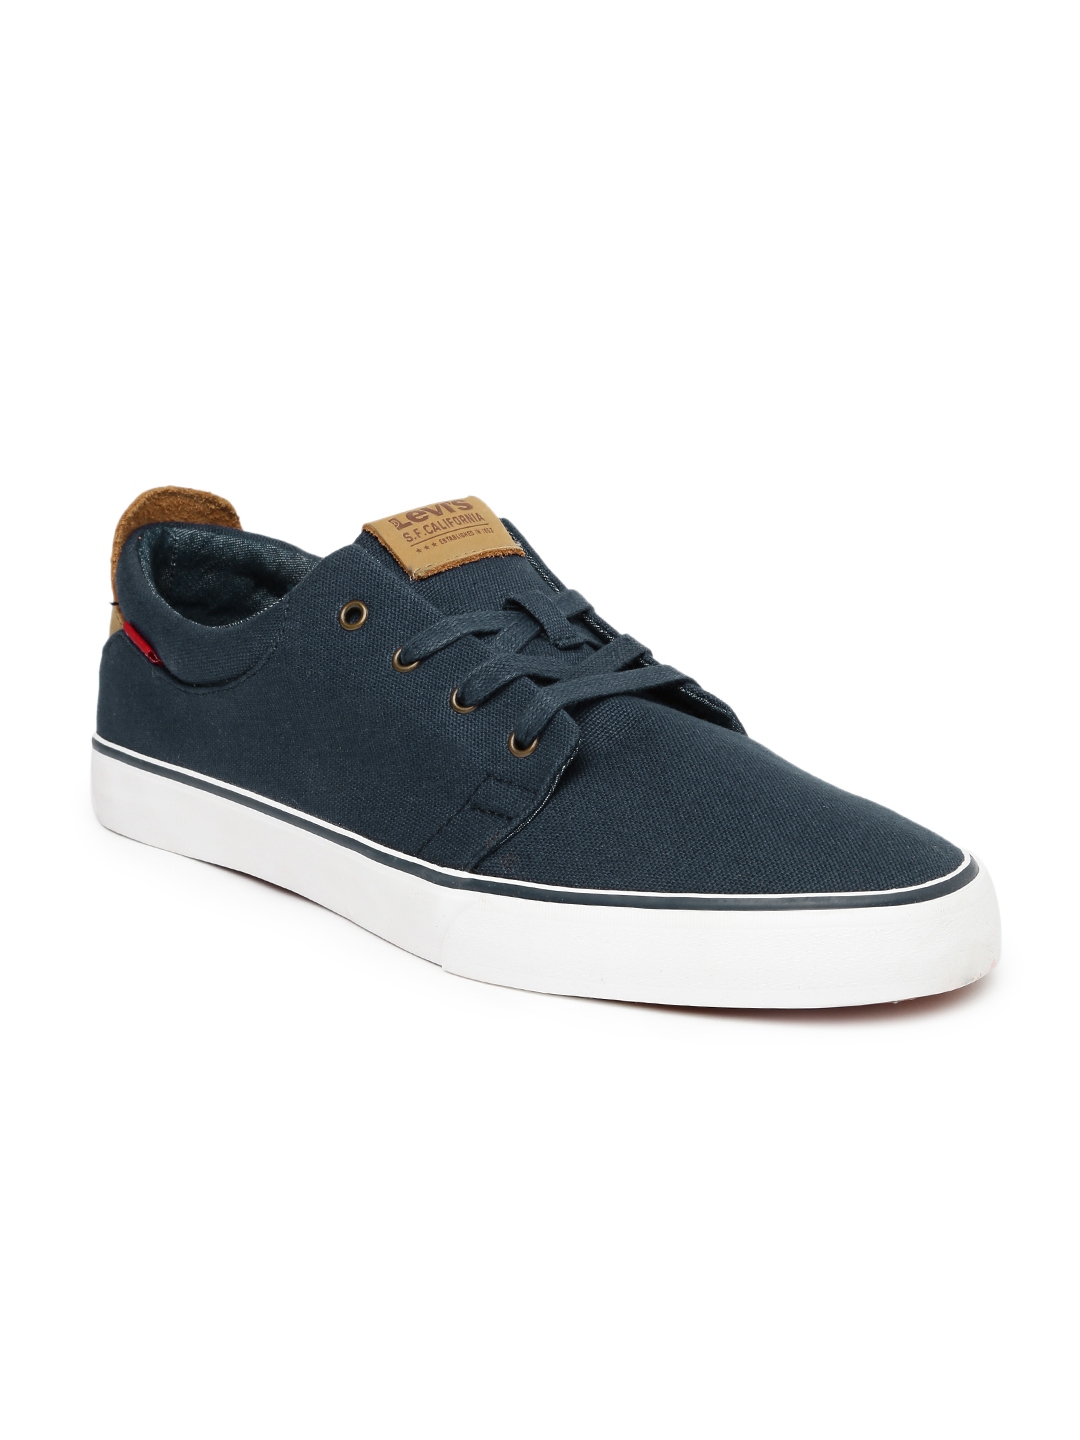 Buy Levis Men Navy Blue Sneakers - Casual Shoes for Men 1813426 | Myntra